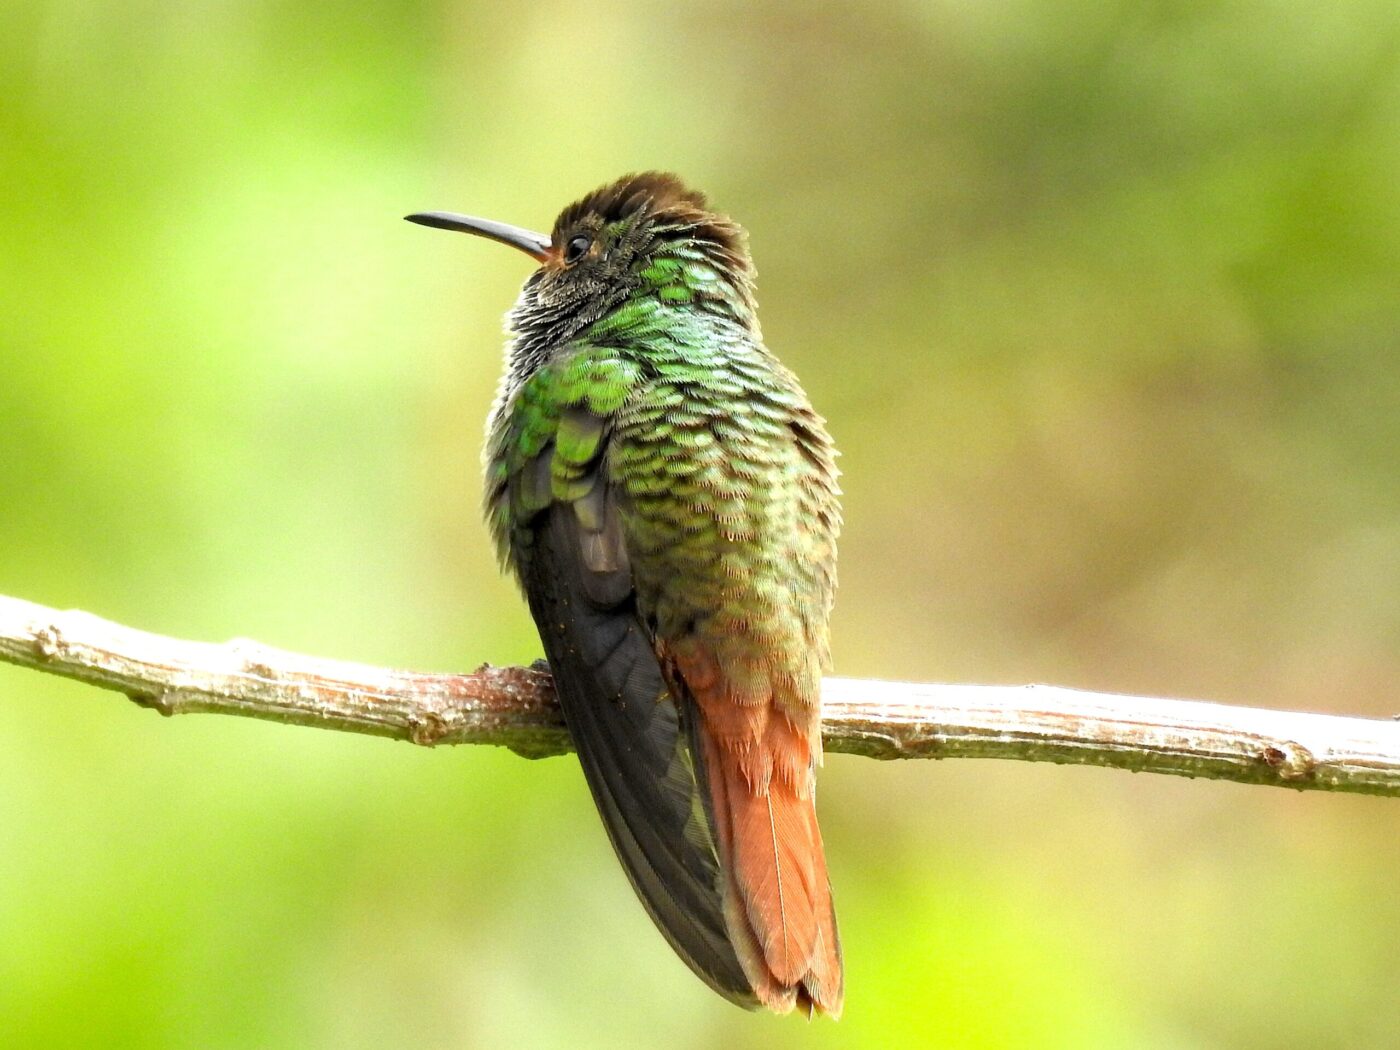 A green hummingbird sits on a tree branch.